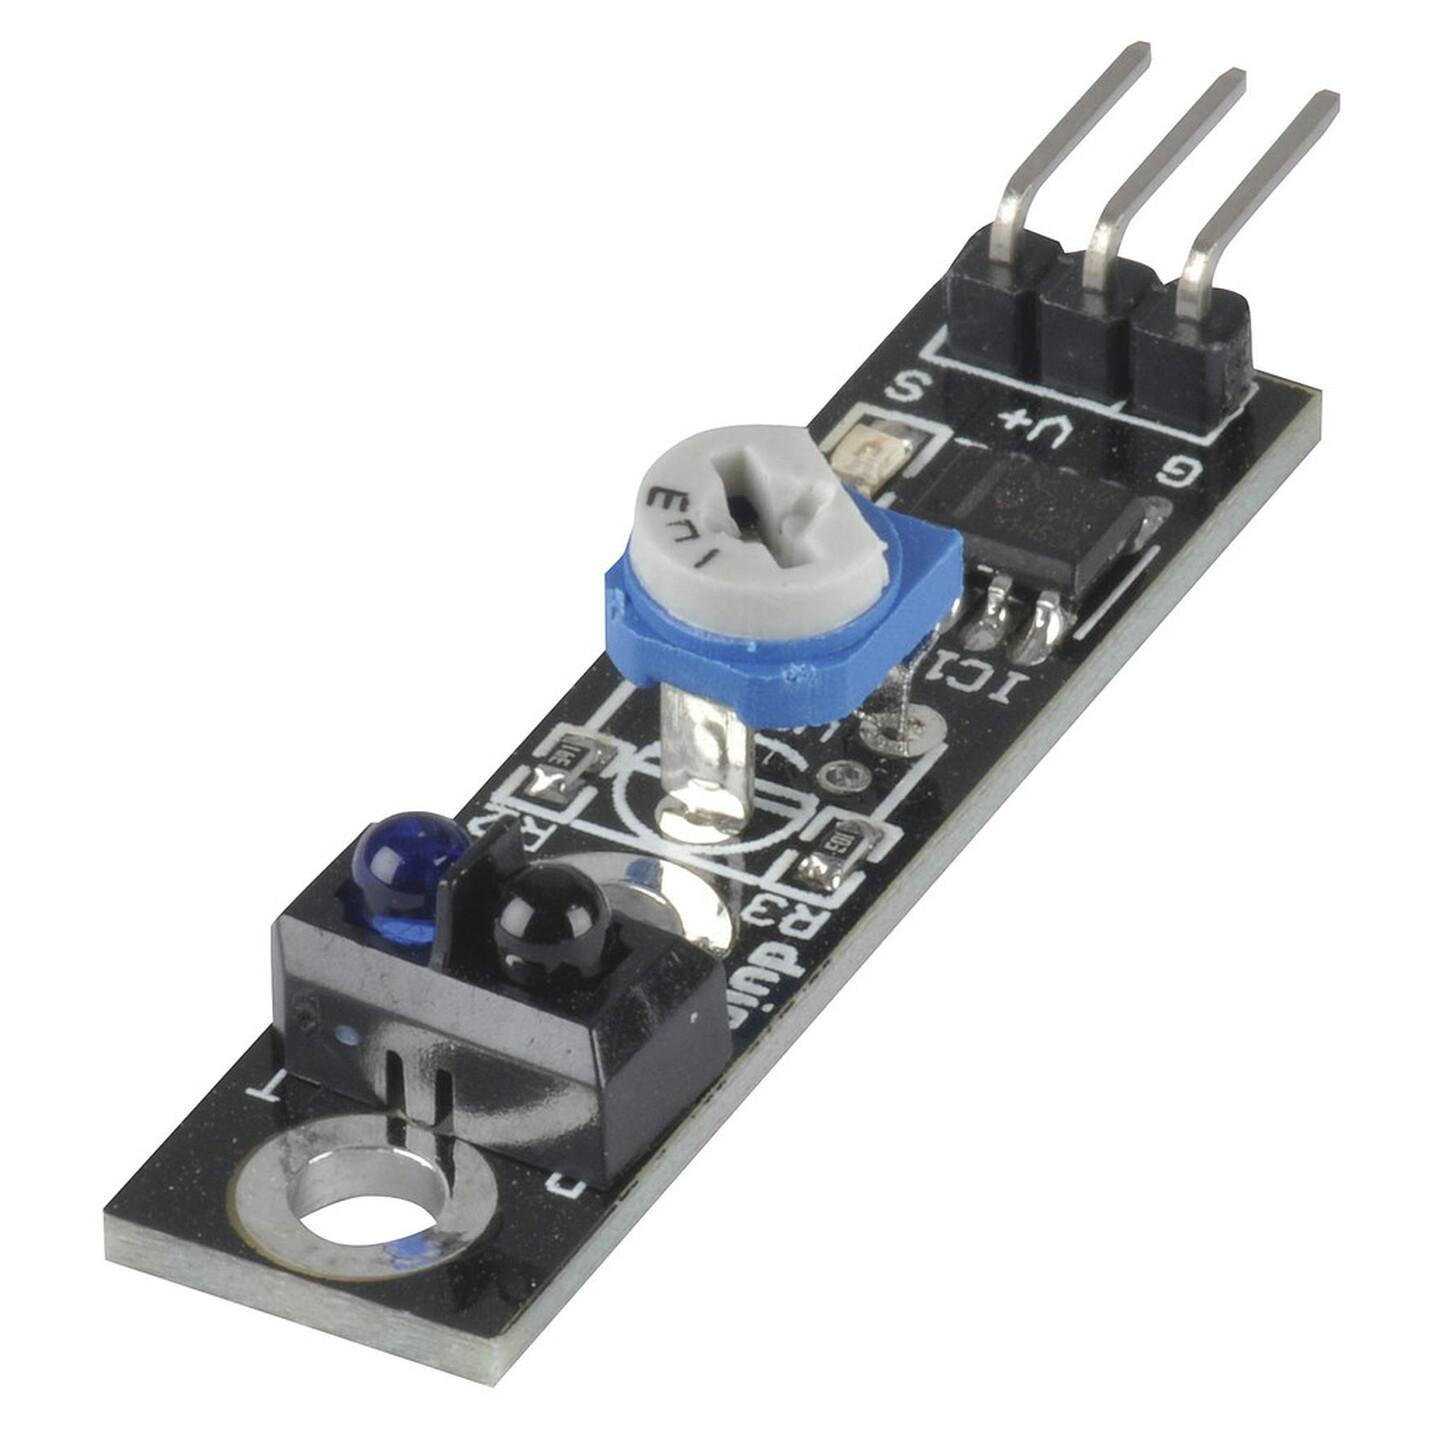 Duinotech Arduino Compatible Line Trace Sensor Module